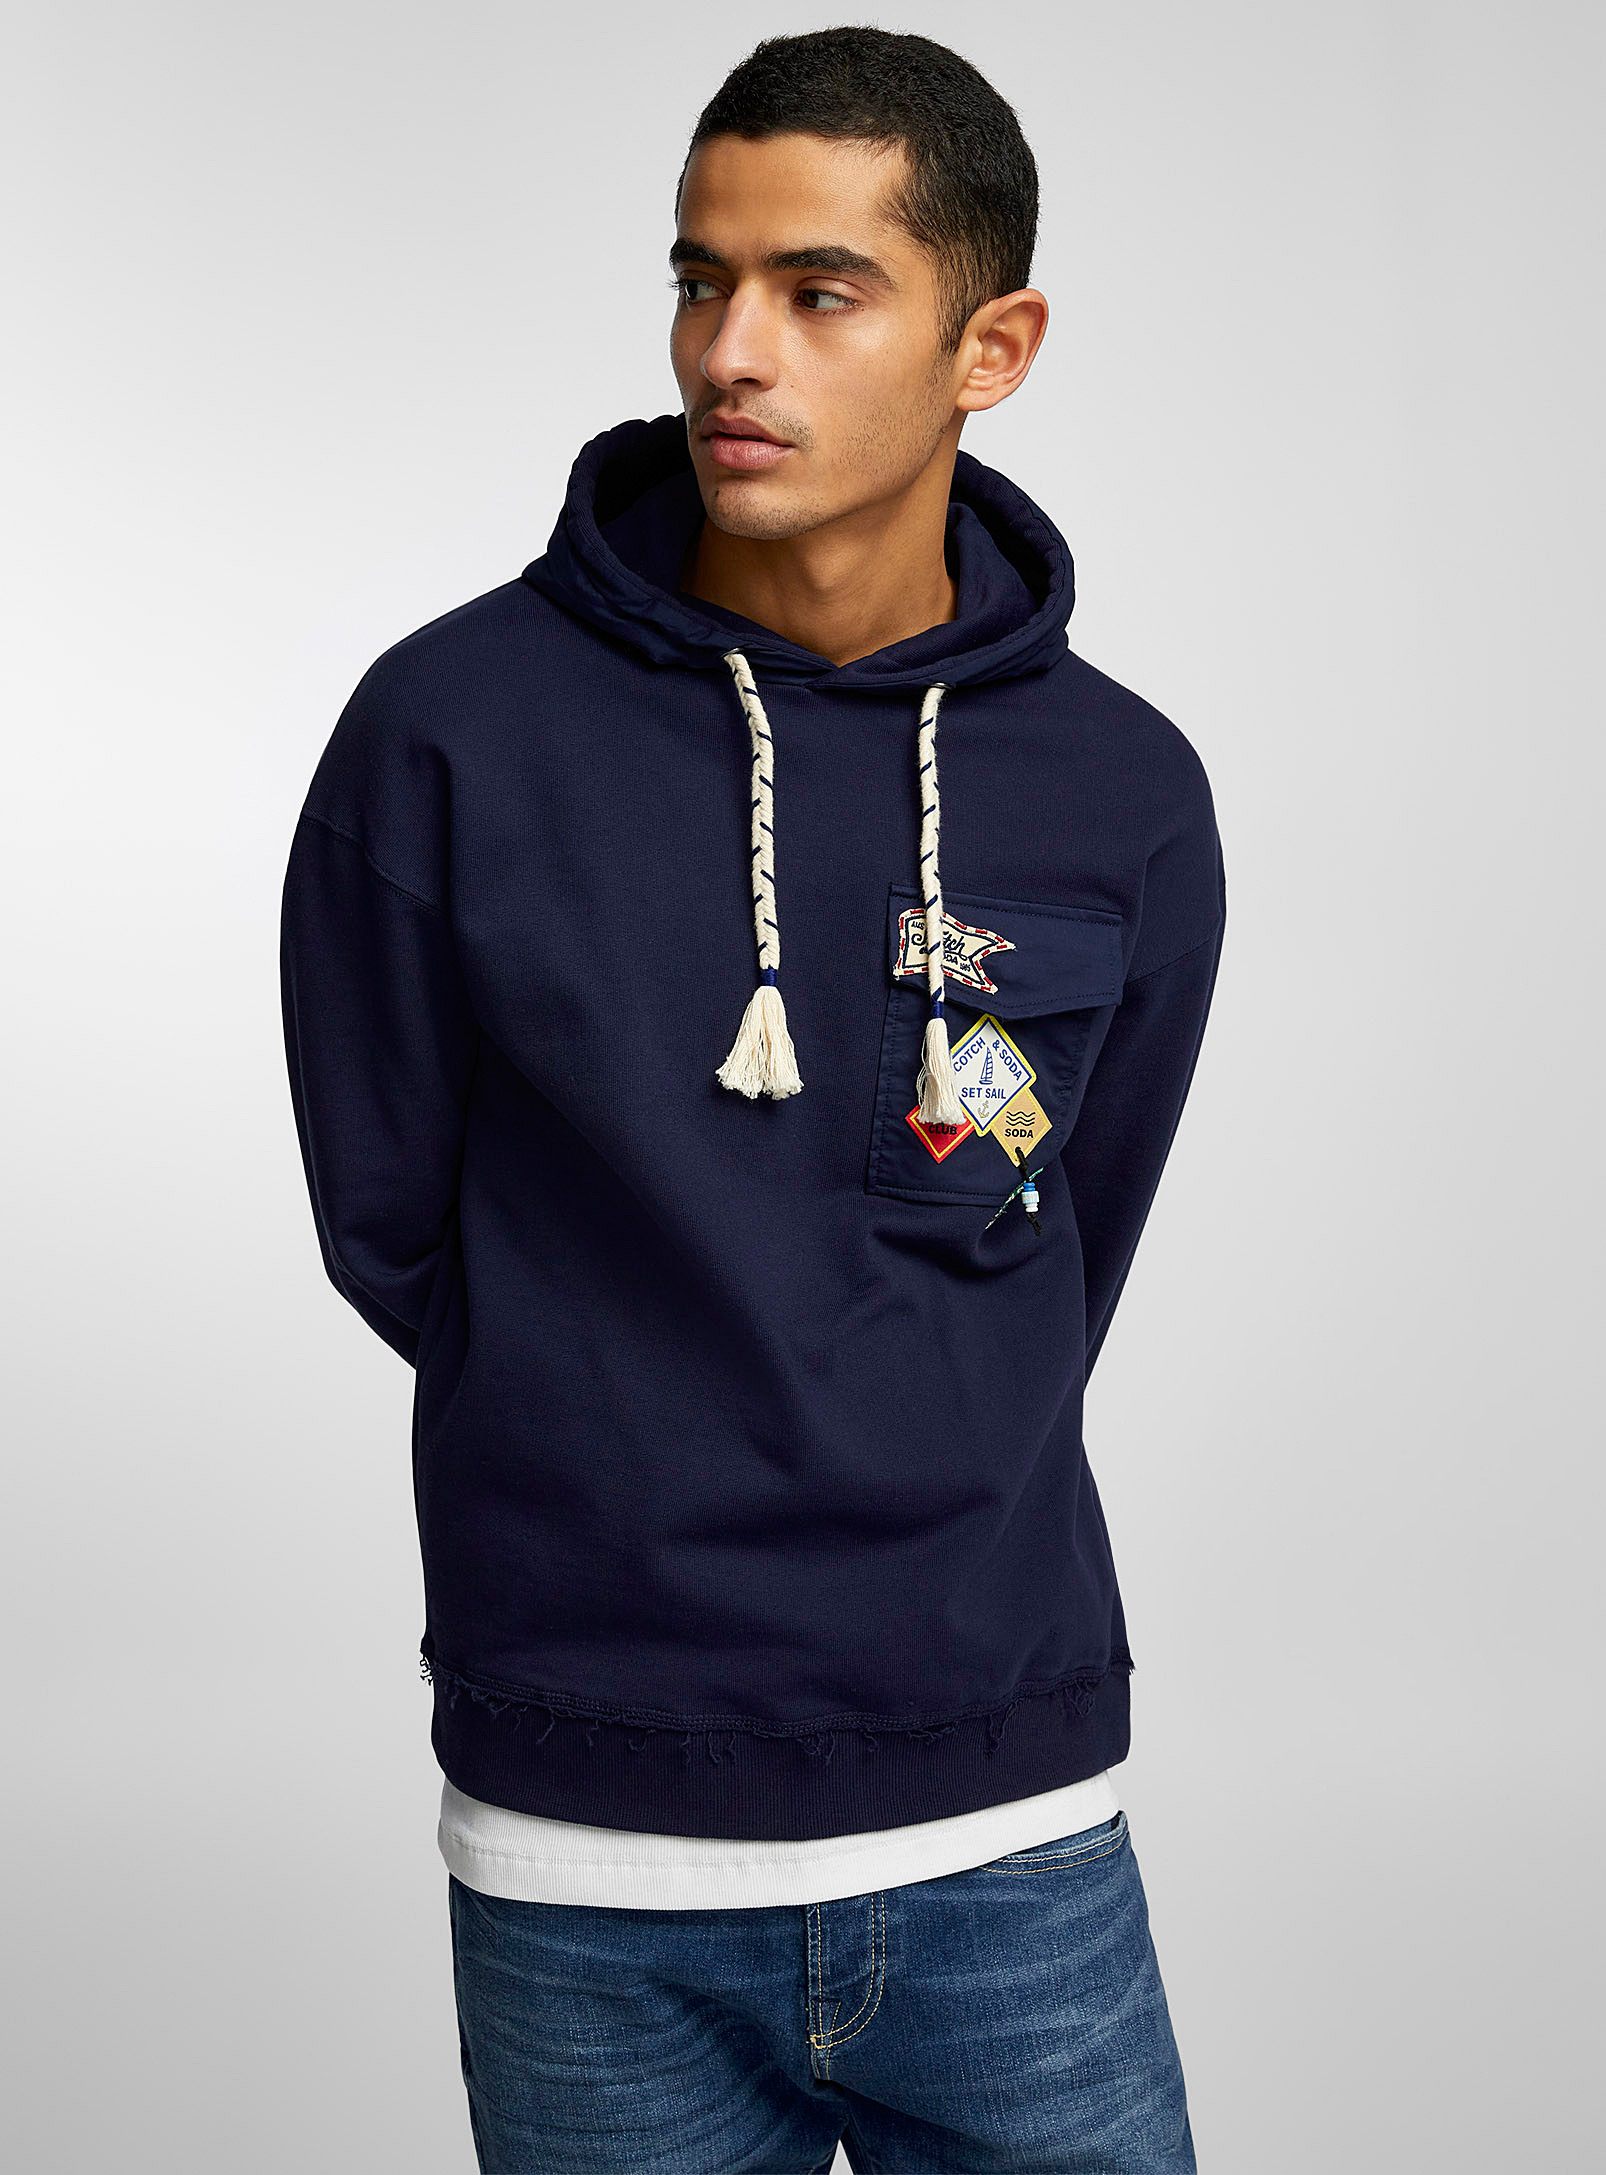 Scotch & Soda - Men's Nautical hooded sweatshirt